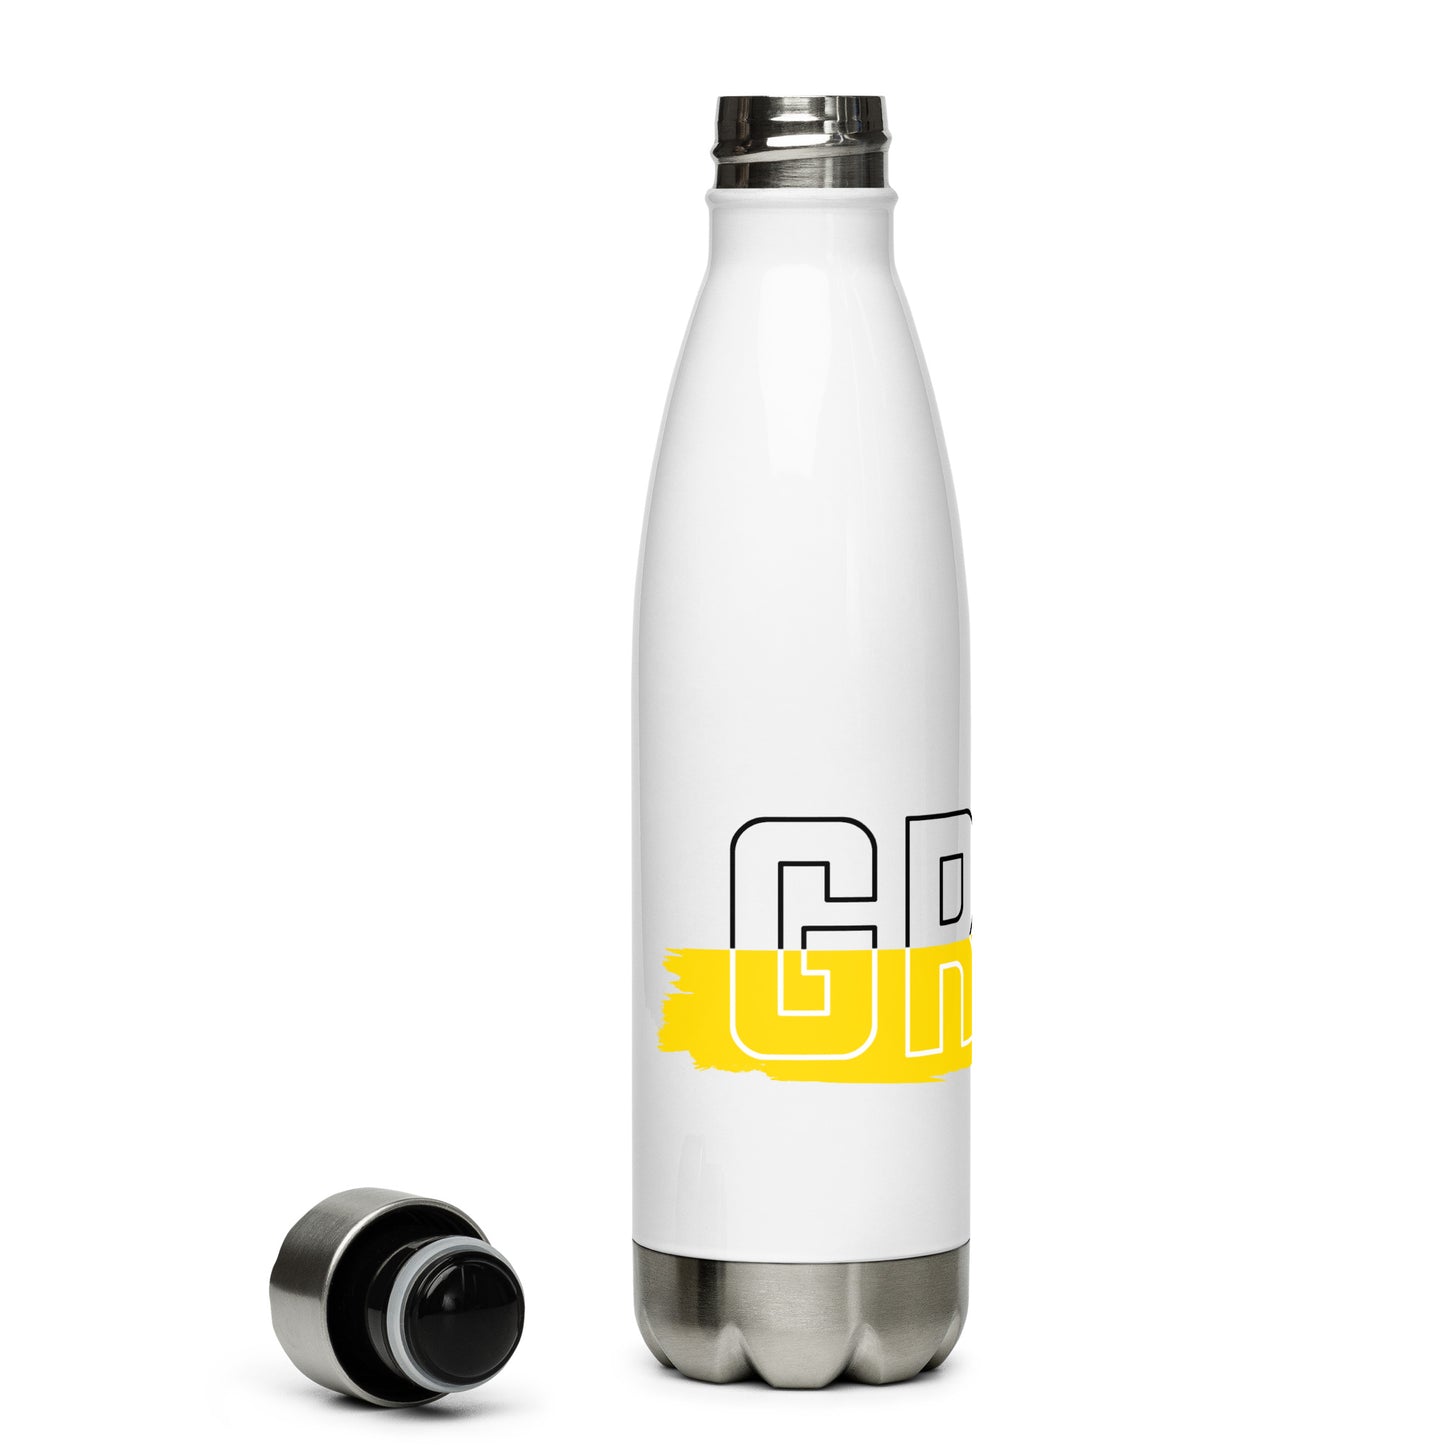 GRAY - Stainless steel water bottle